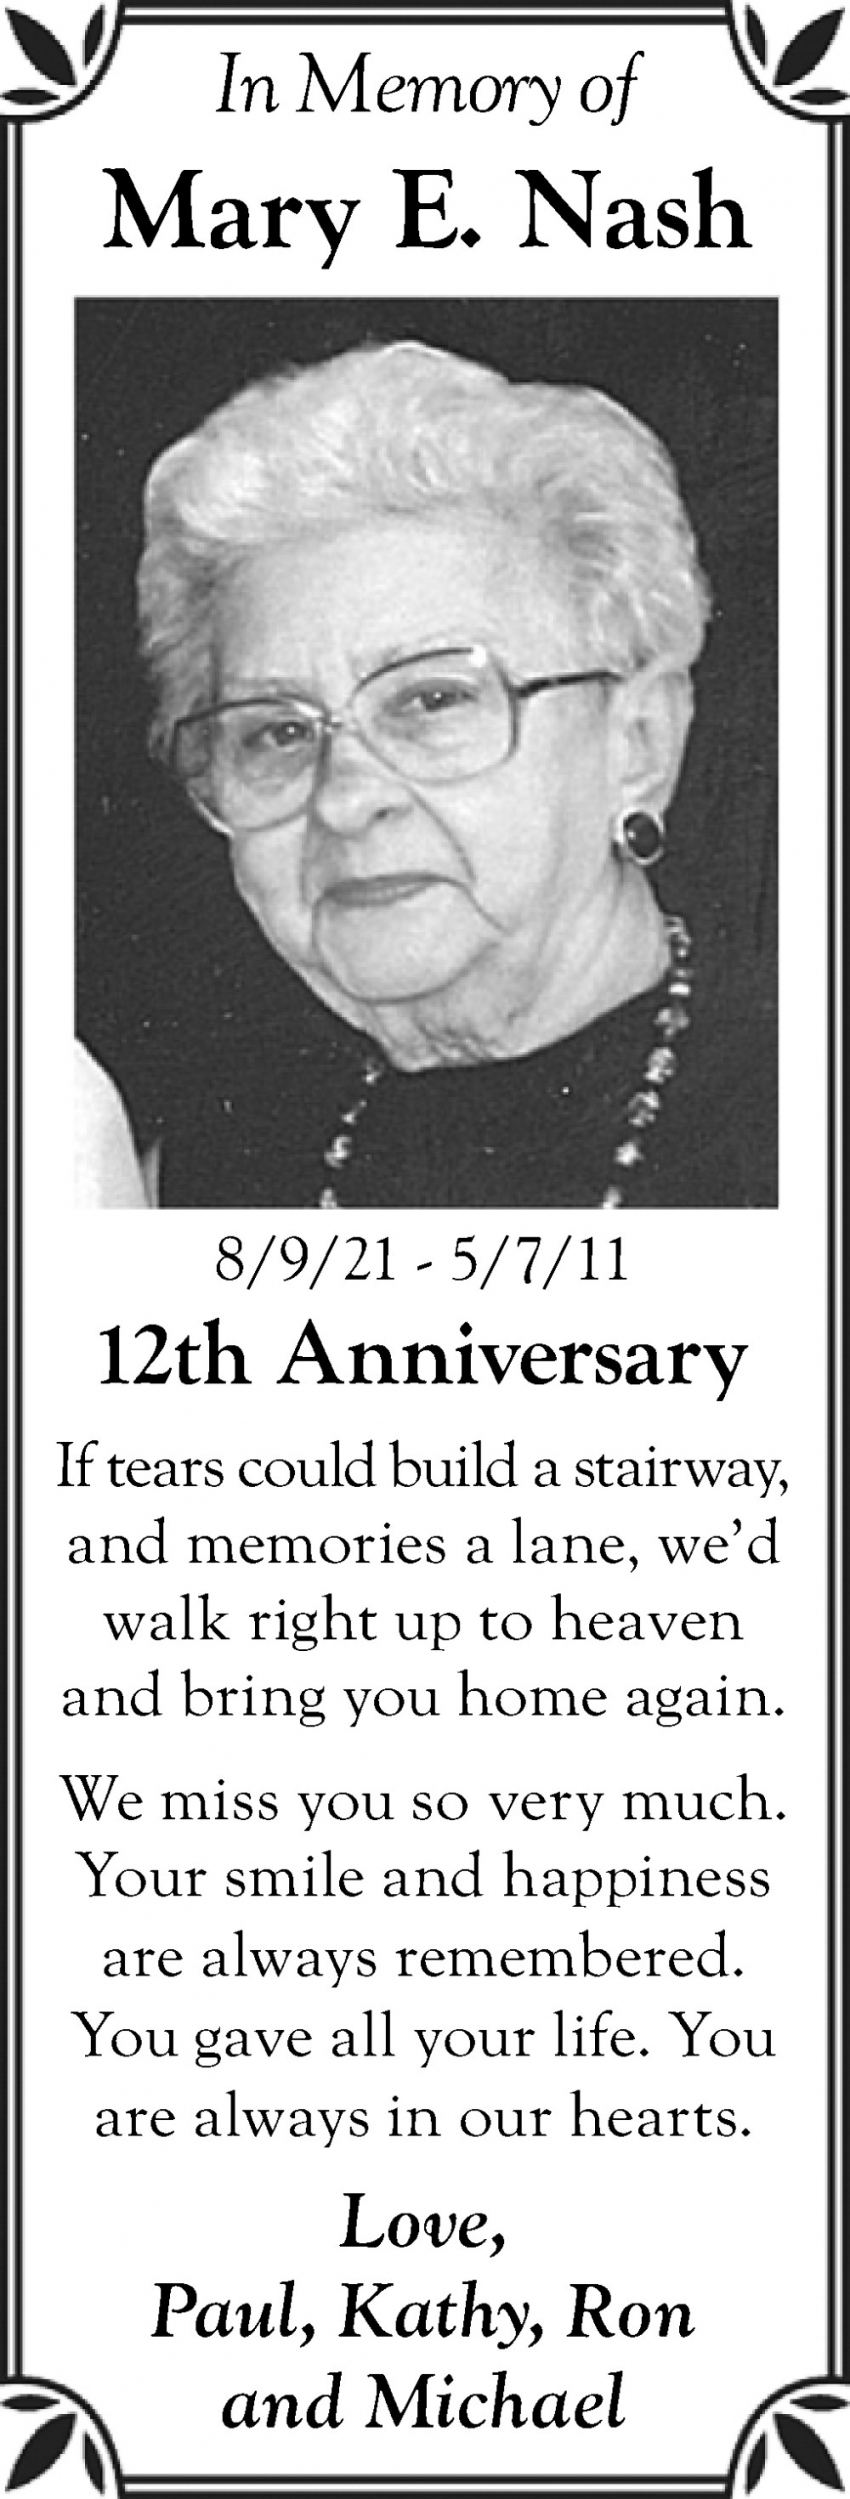 In Memory of Mary E. Nash